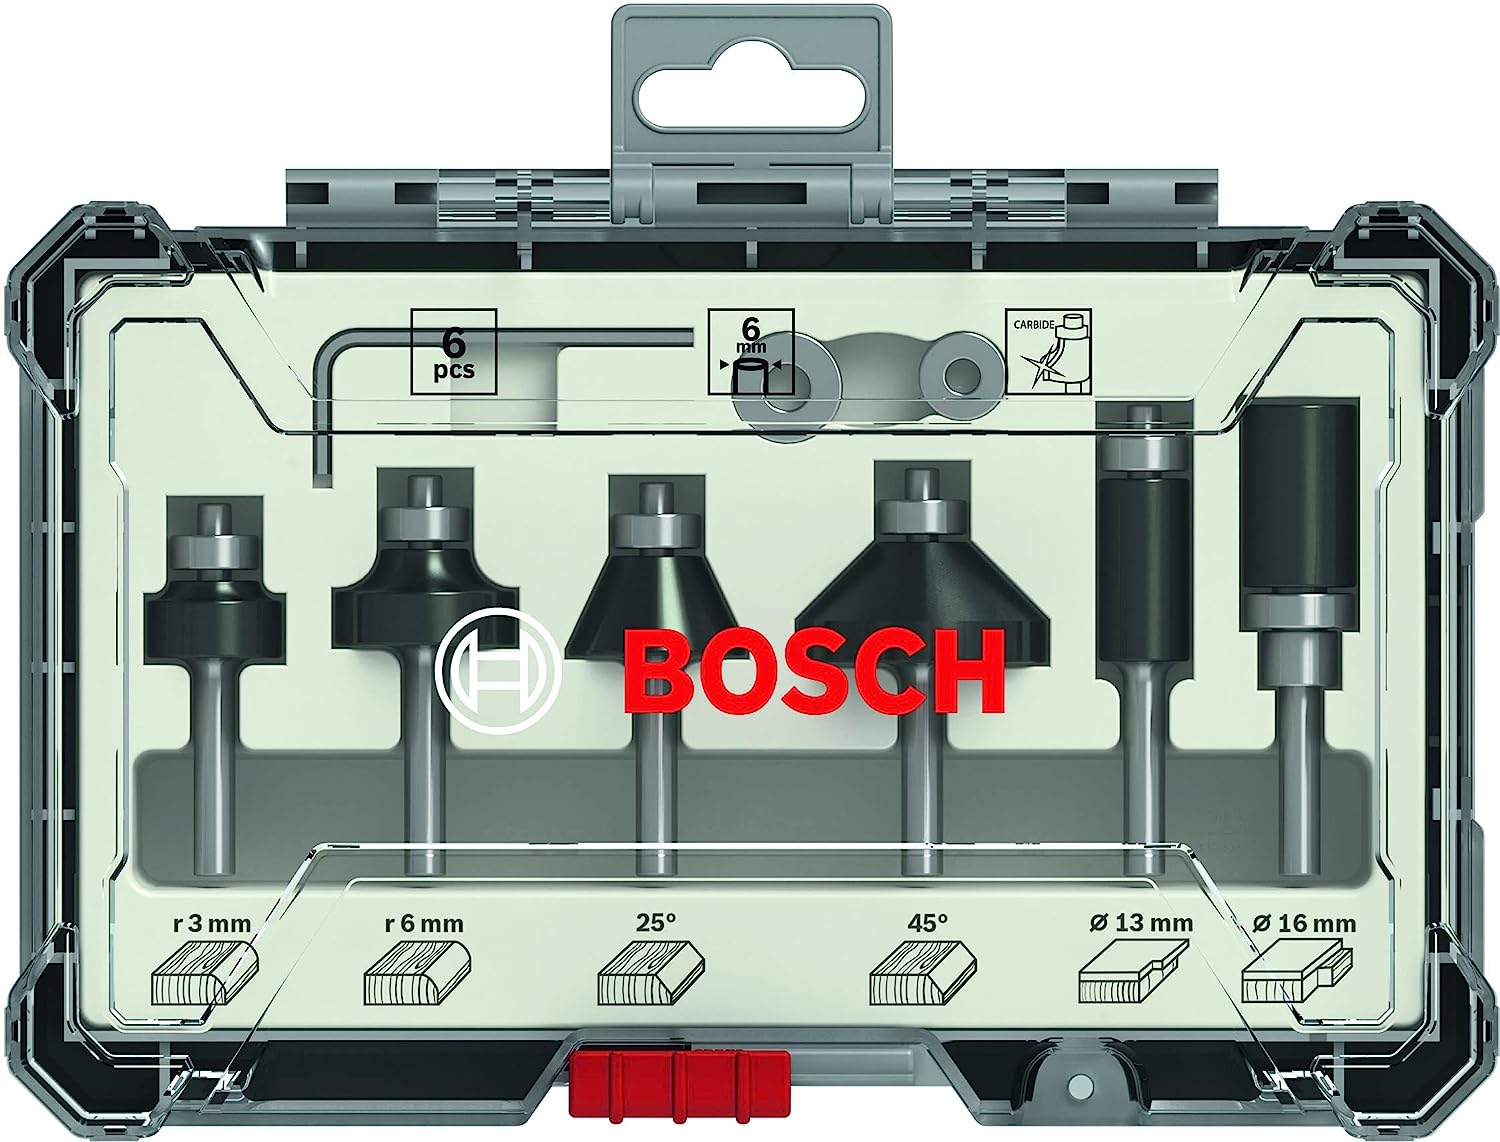 Bosch Professional 2607017468 6 Pcs Trim & Edging Router Bit Set With 6 mm Shank